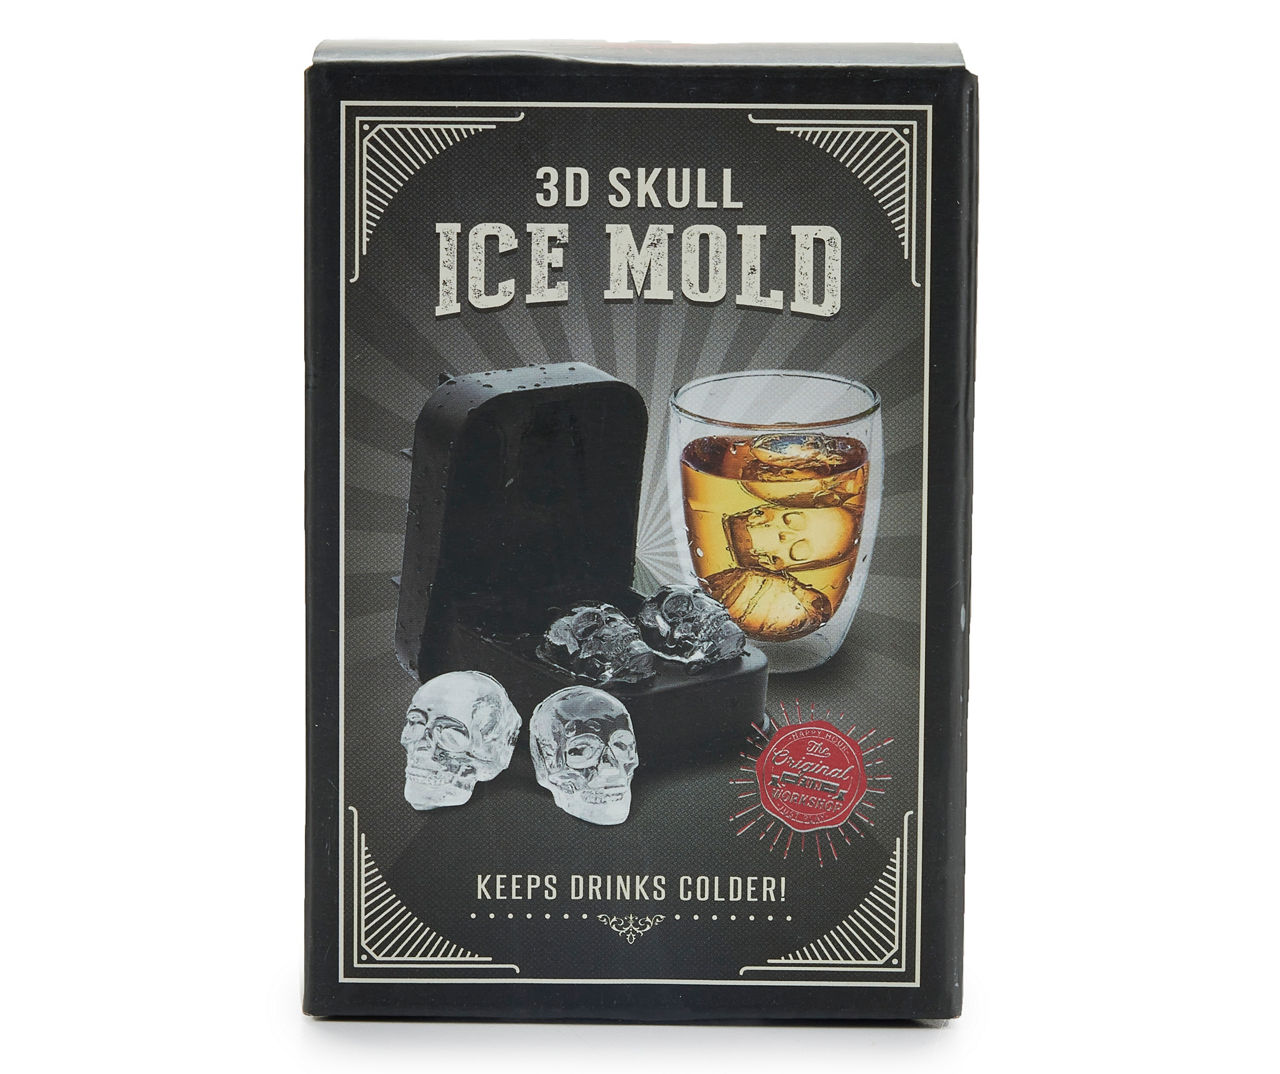 Novelty Skull Ice Mold - Set of 2